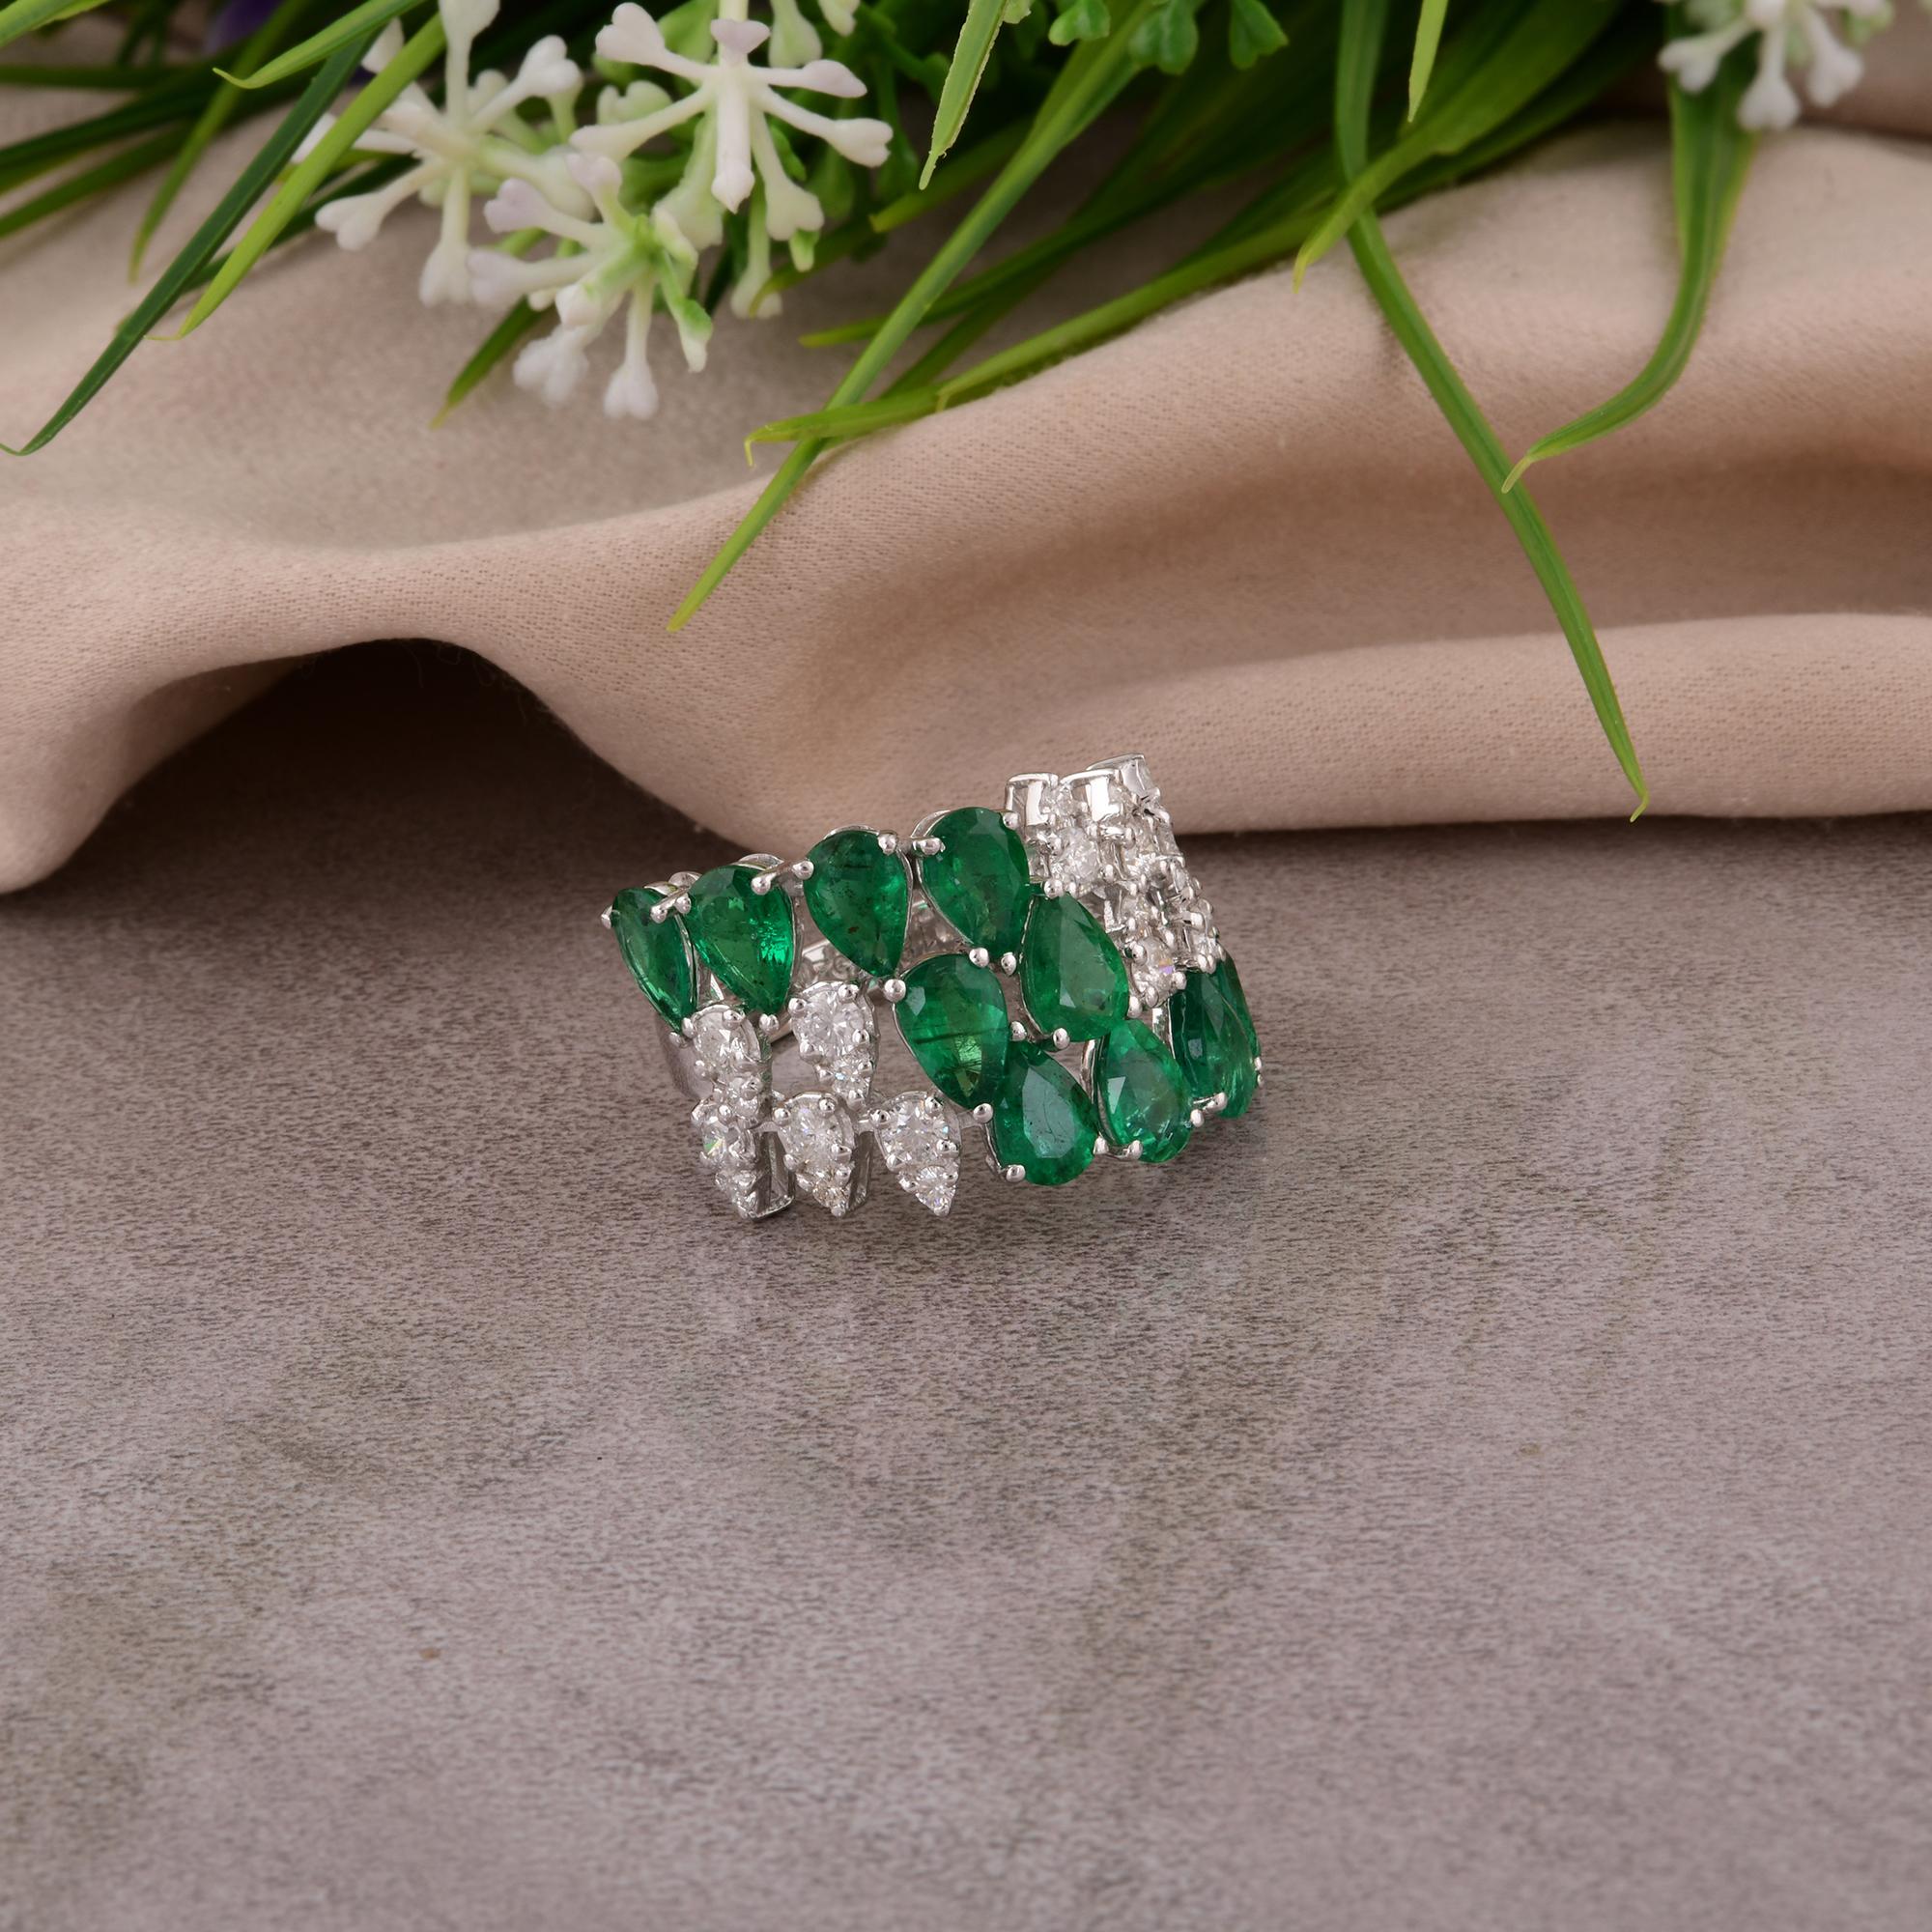 Pear Cut Pear Zambian Emerald Gemstone Ring Diamond 18 Karat White Gold Handmade Jewelry For Sale